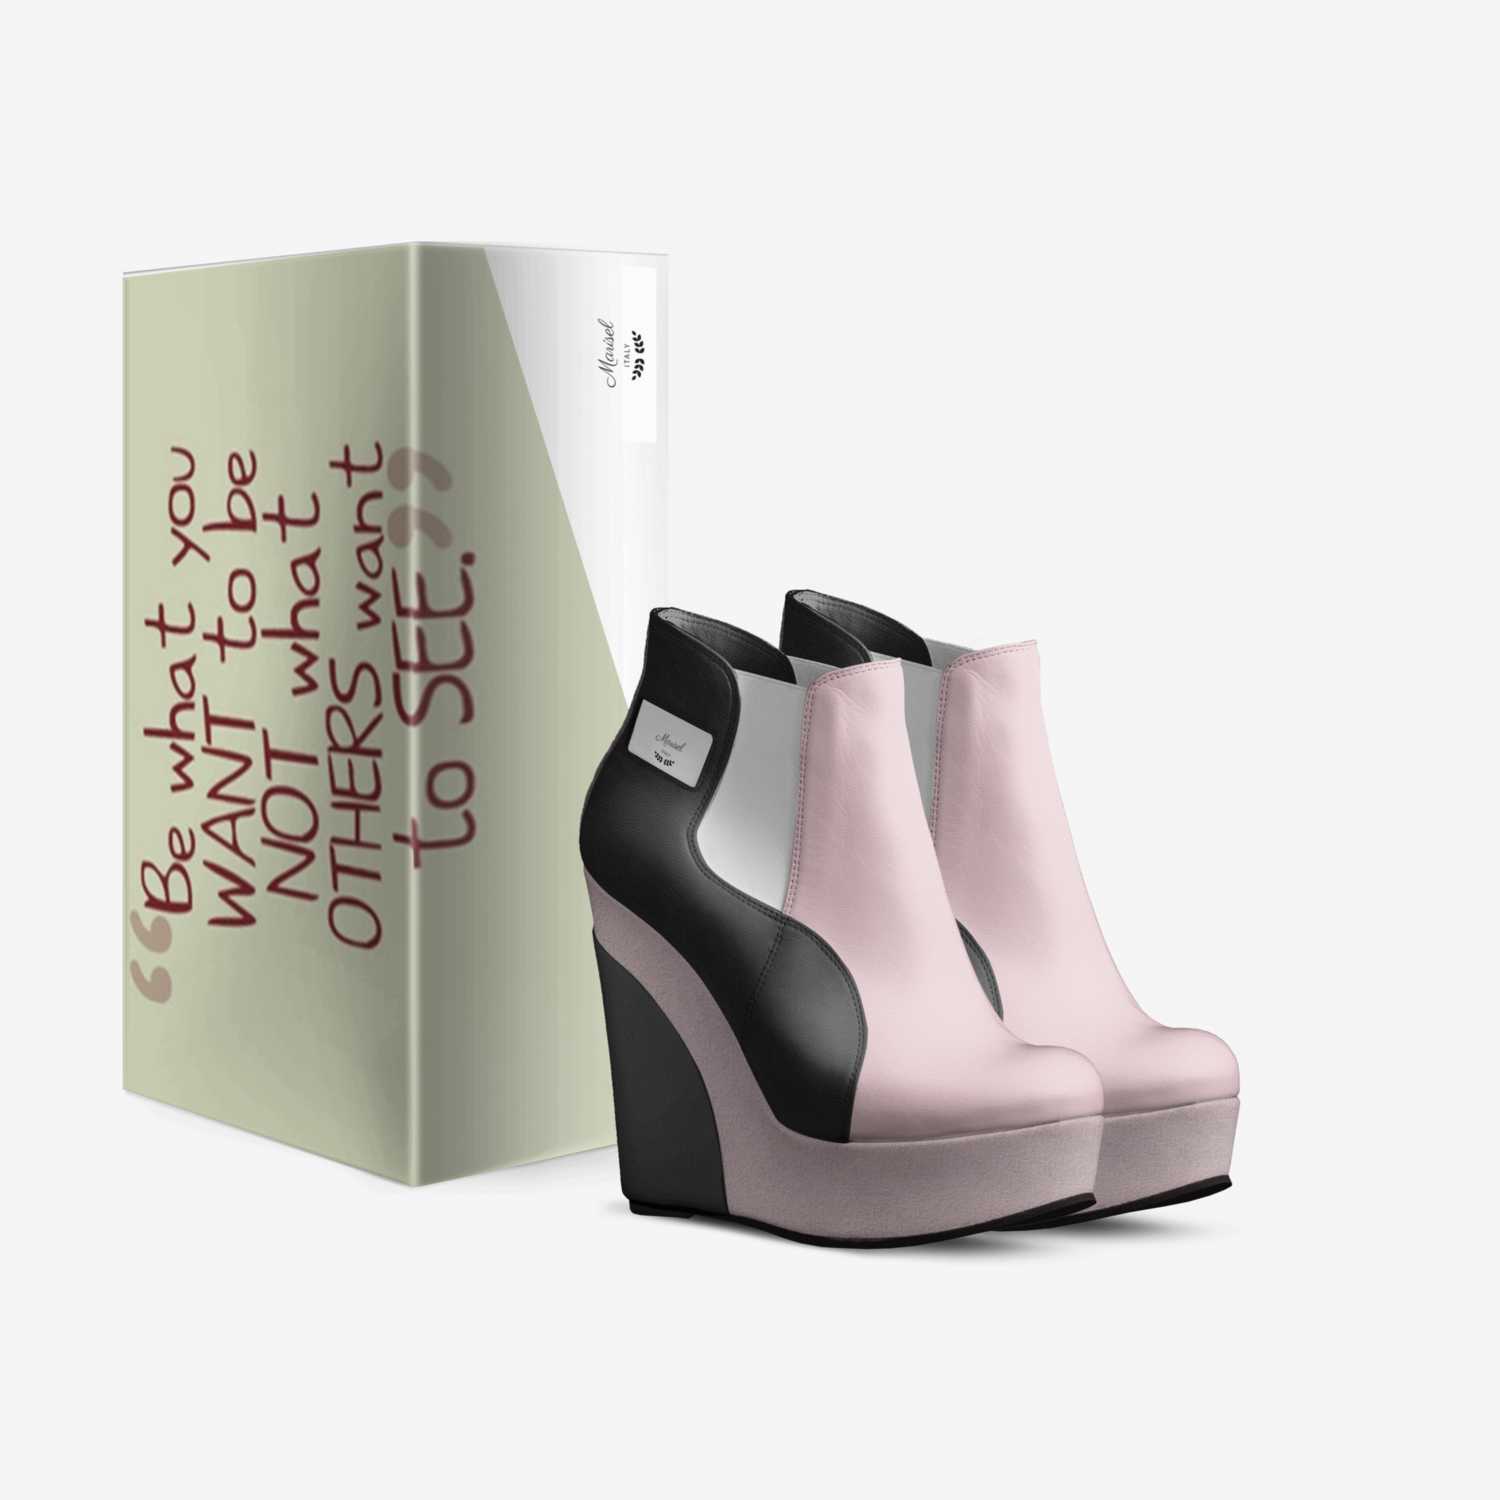 Marisel custom made in Italy shoes by Marijana | Box view